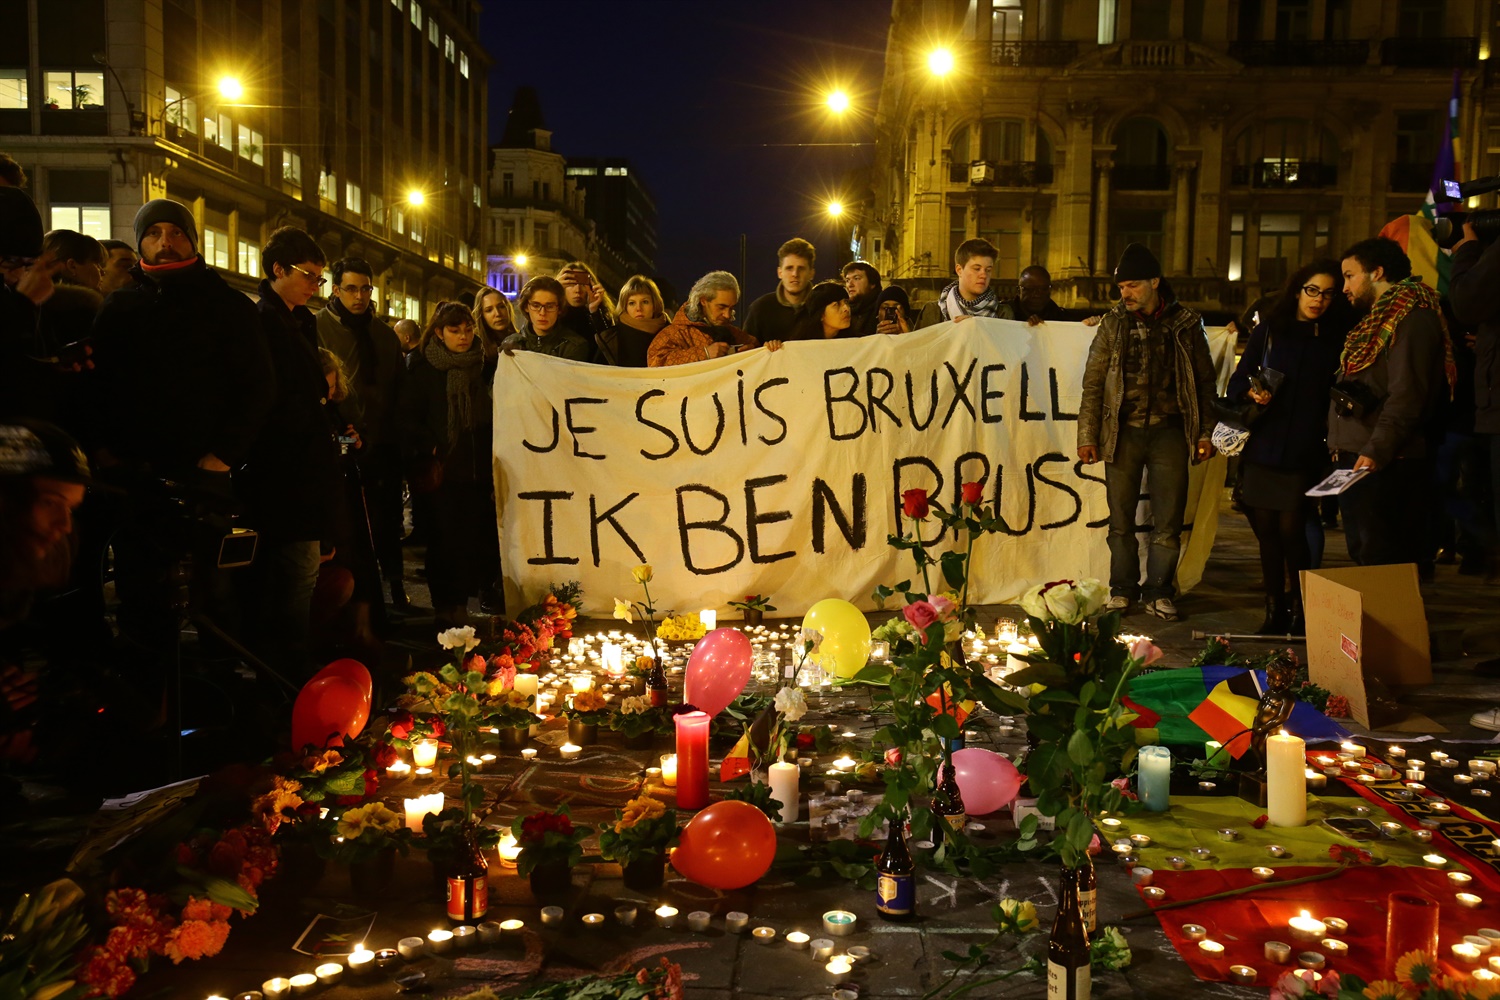 BTP deploy extra resources following Brussels terrorist attacks